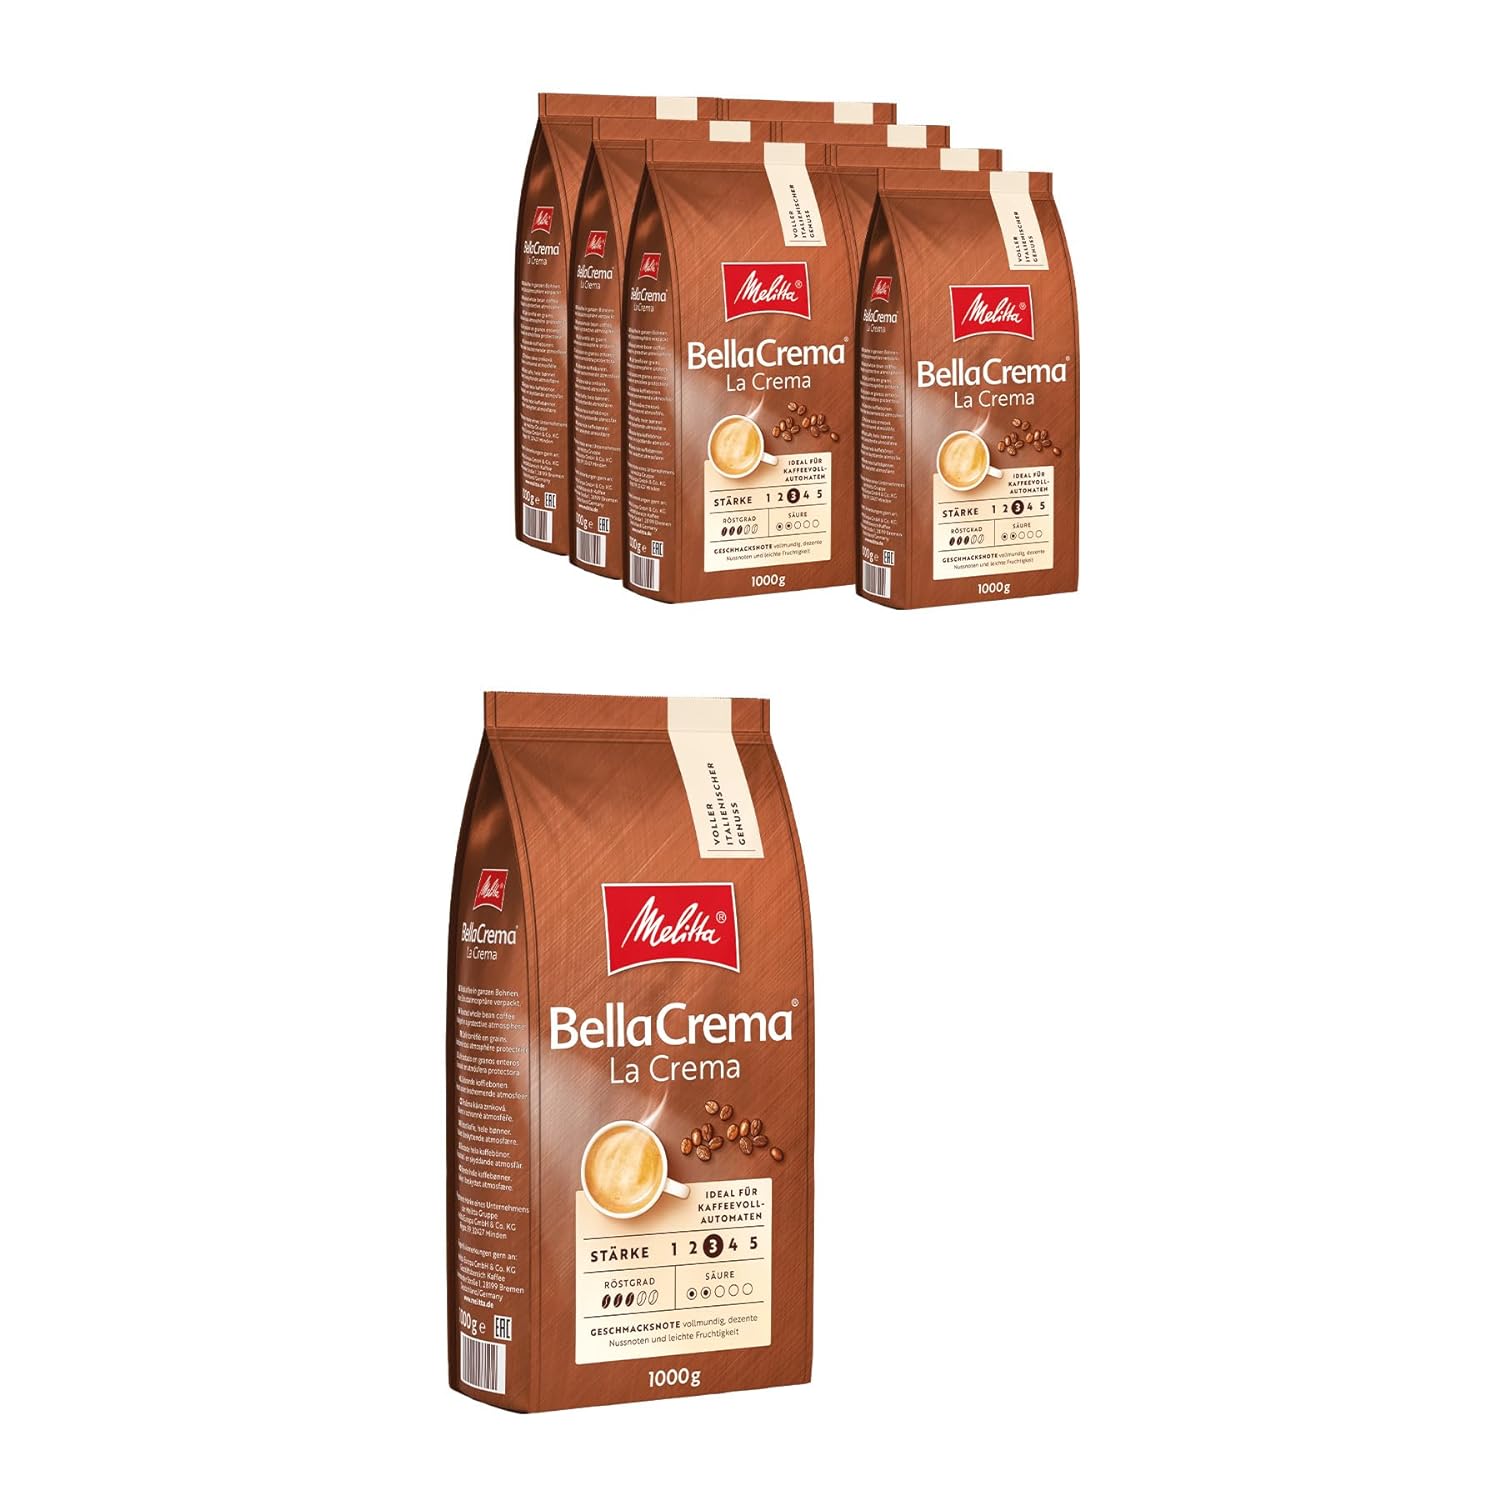 Melitta Bella Crema Lacrema Whole Beans Coffee, Coffee Beans, Medium - 8 Packs 1000g